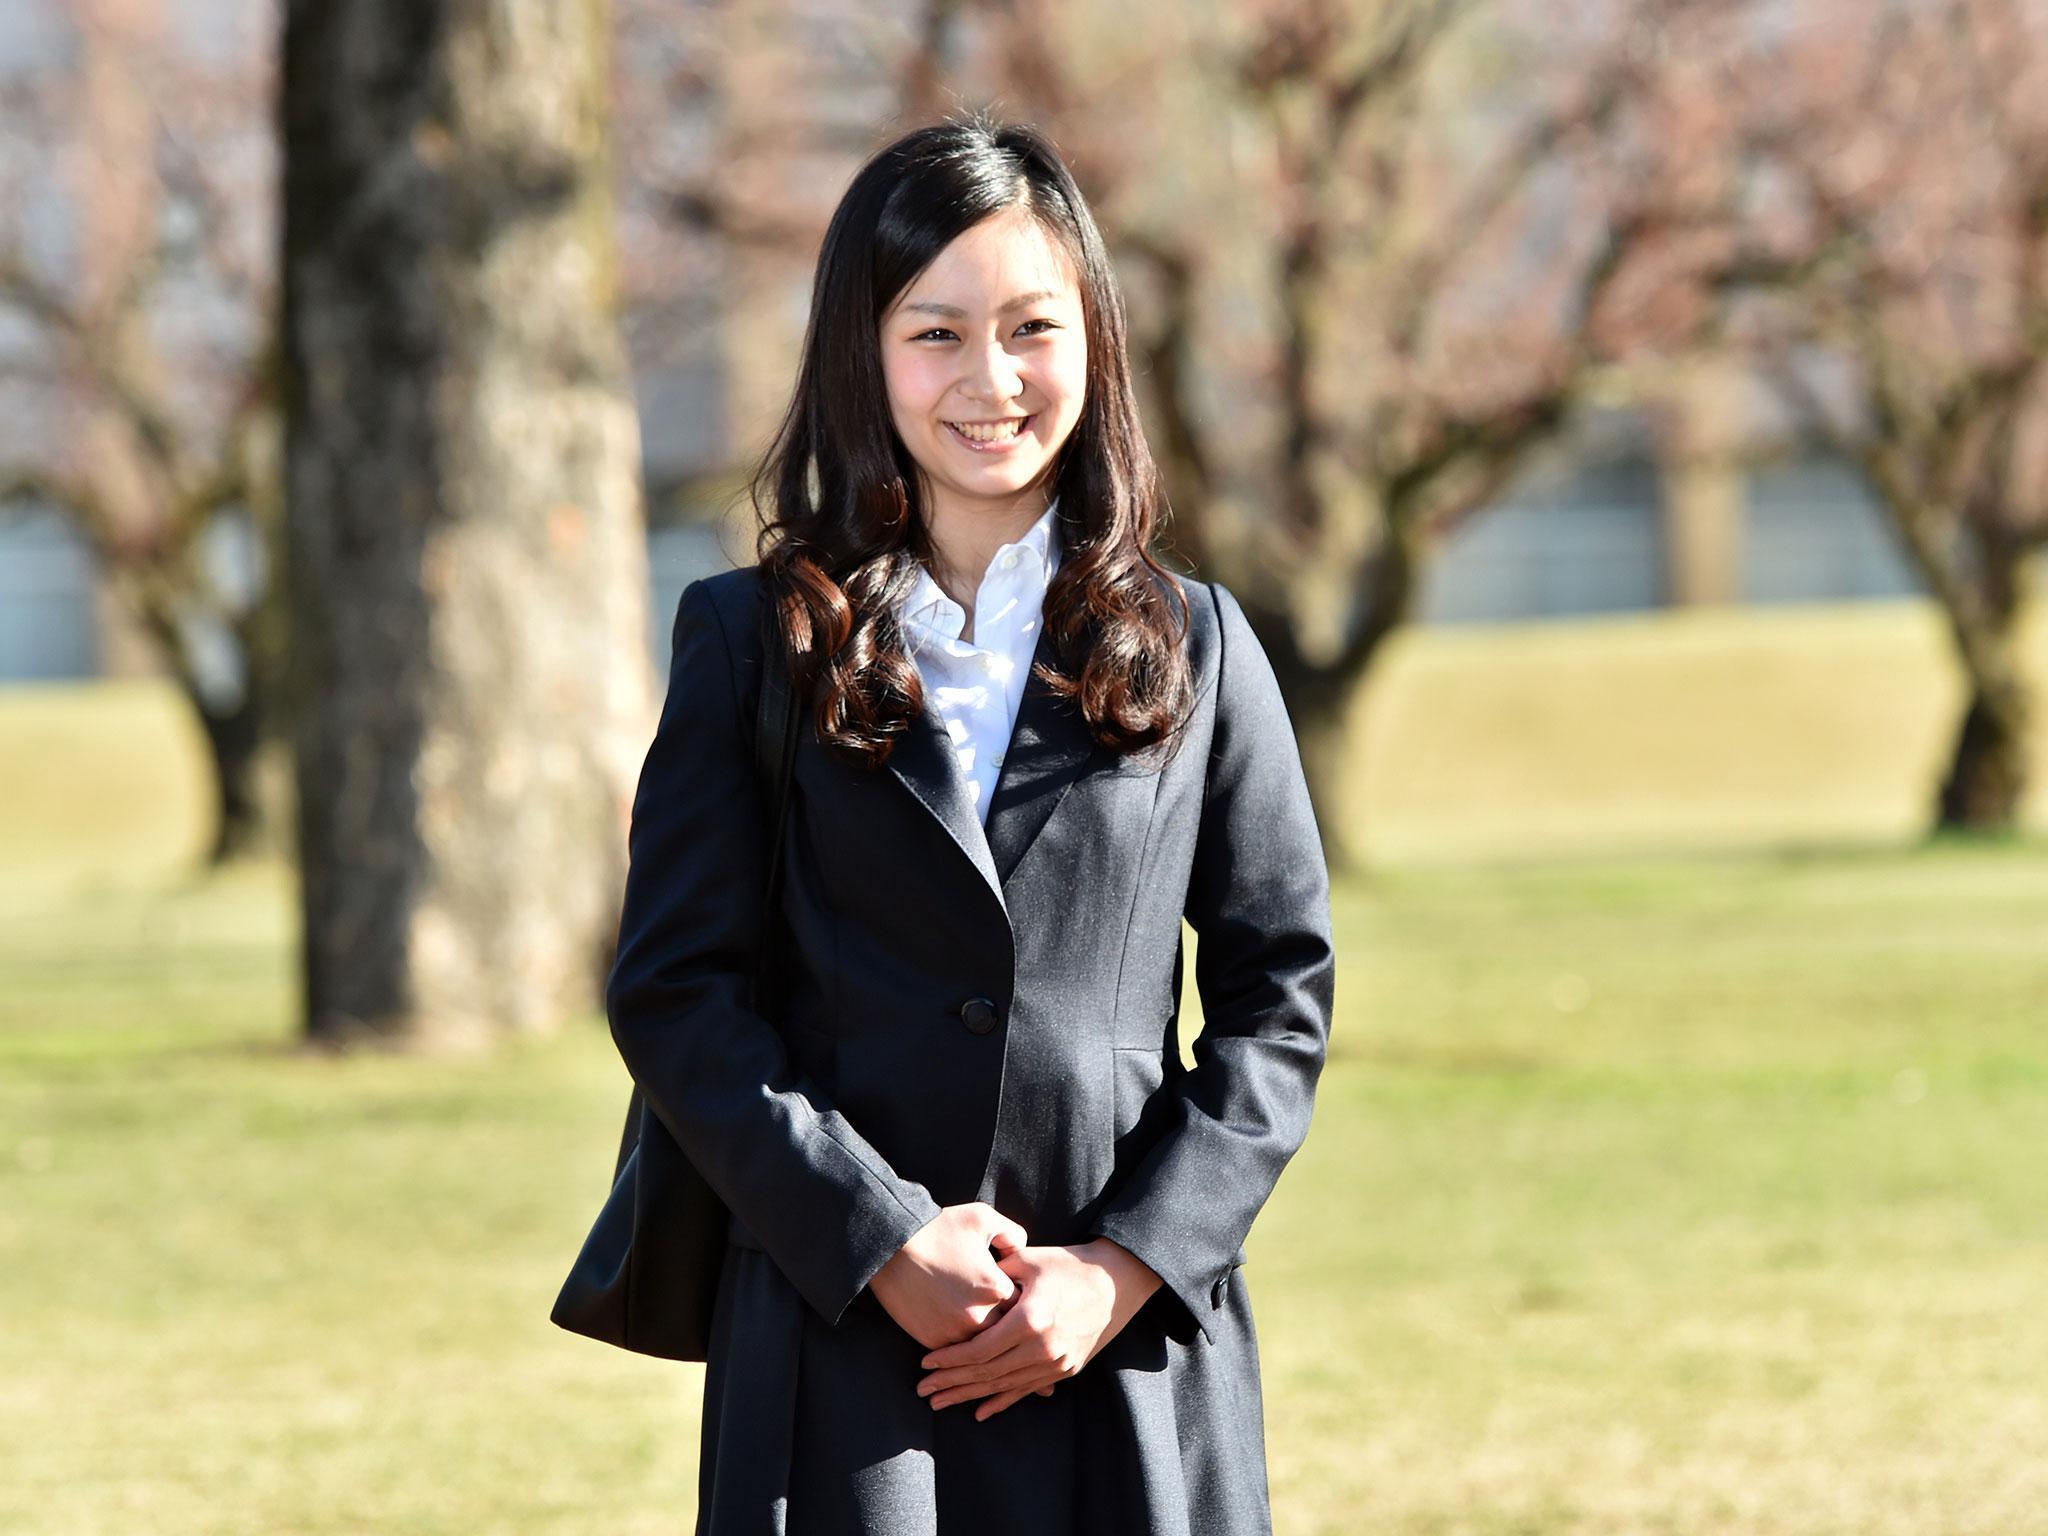 Japanese Princess Kako arrives at the International Christian University in Tokyo